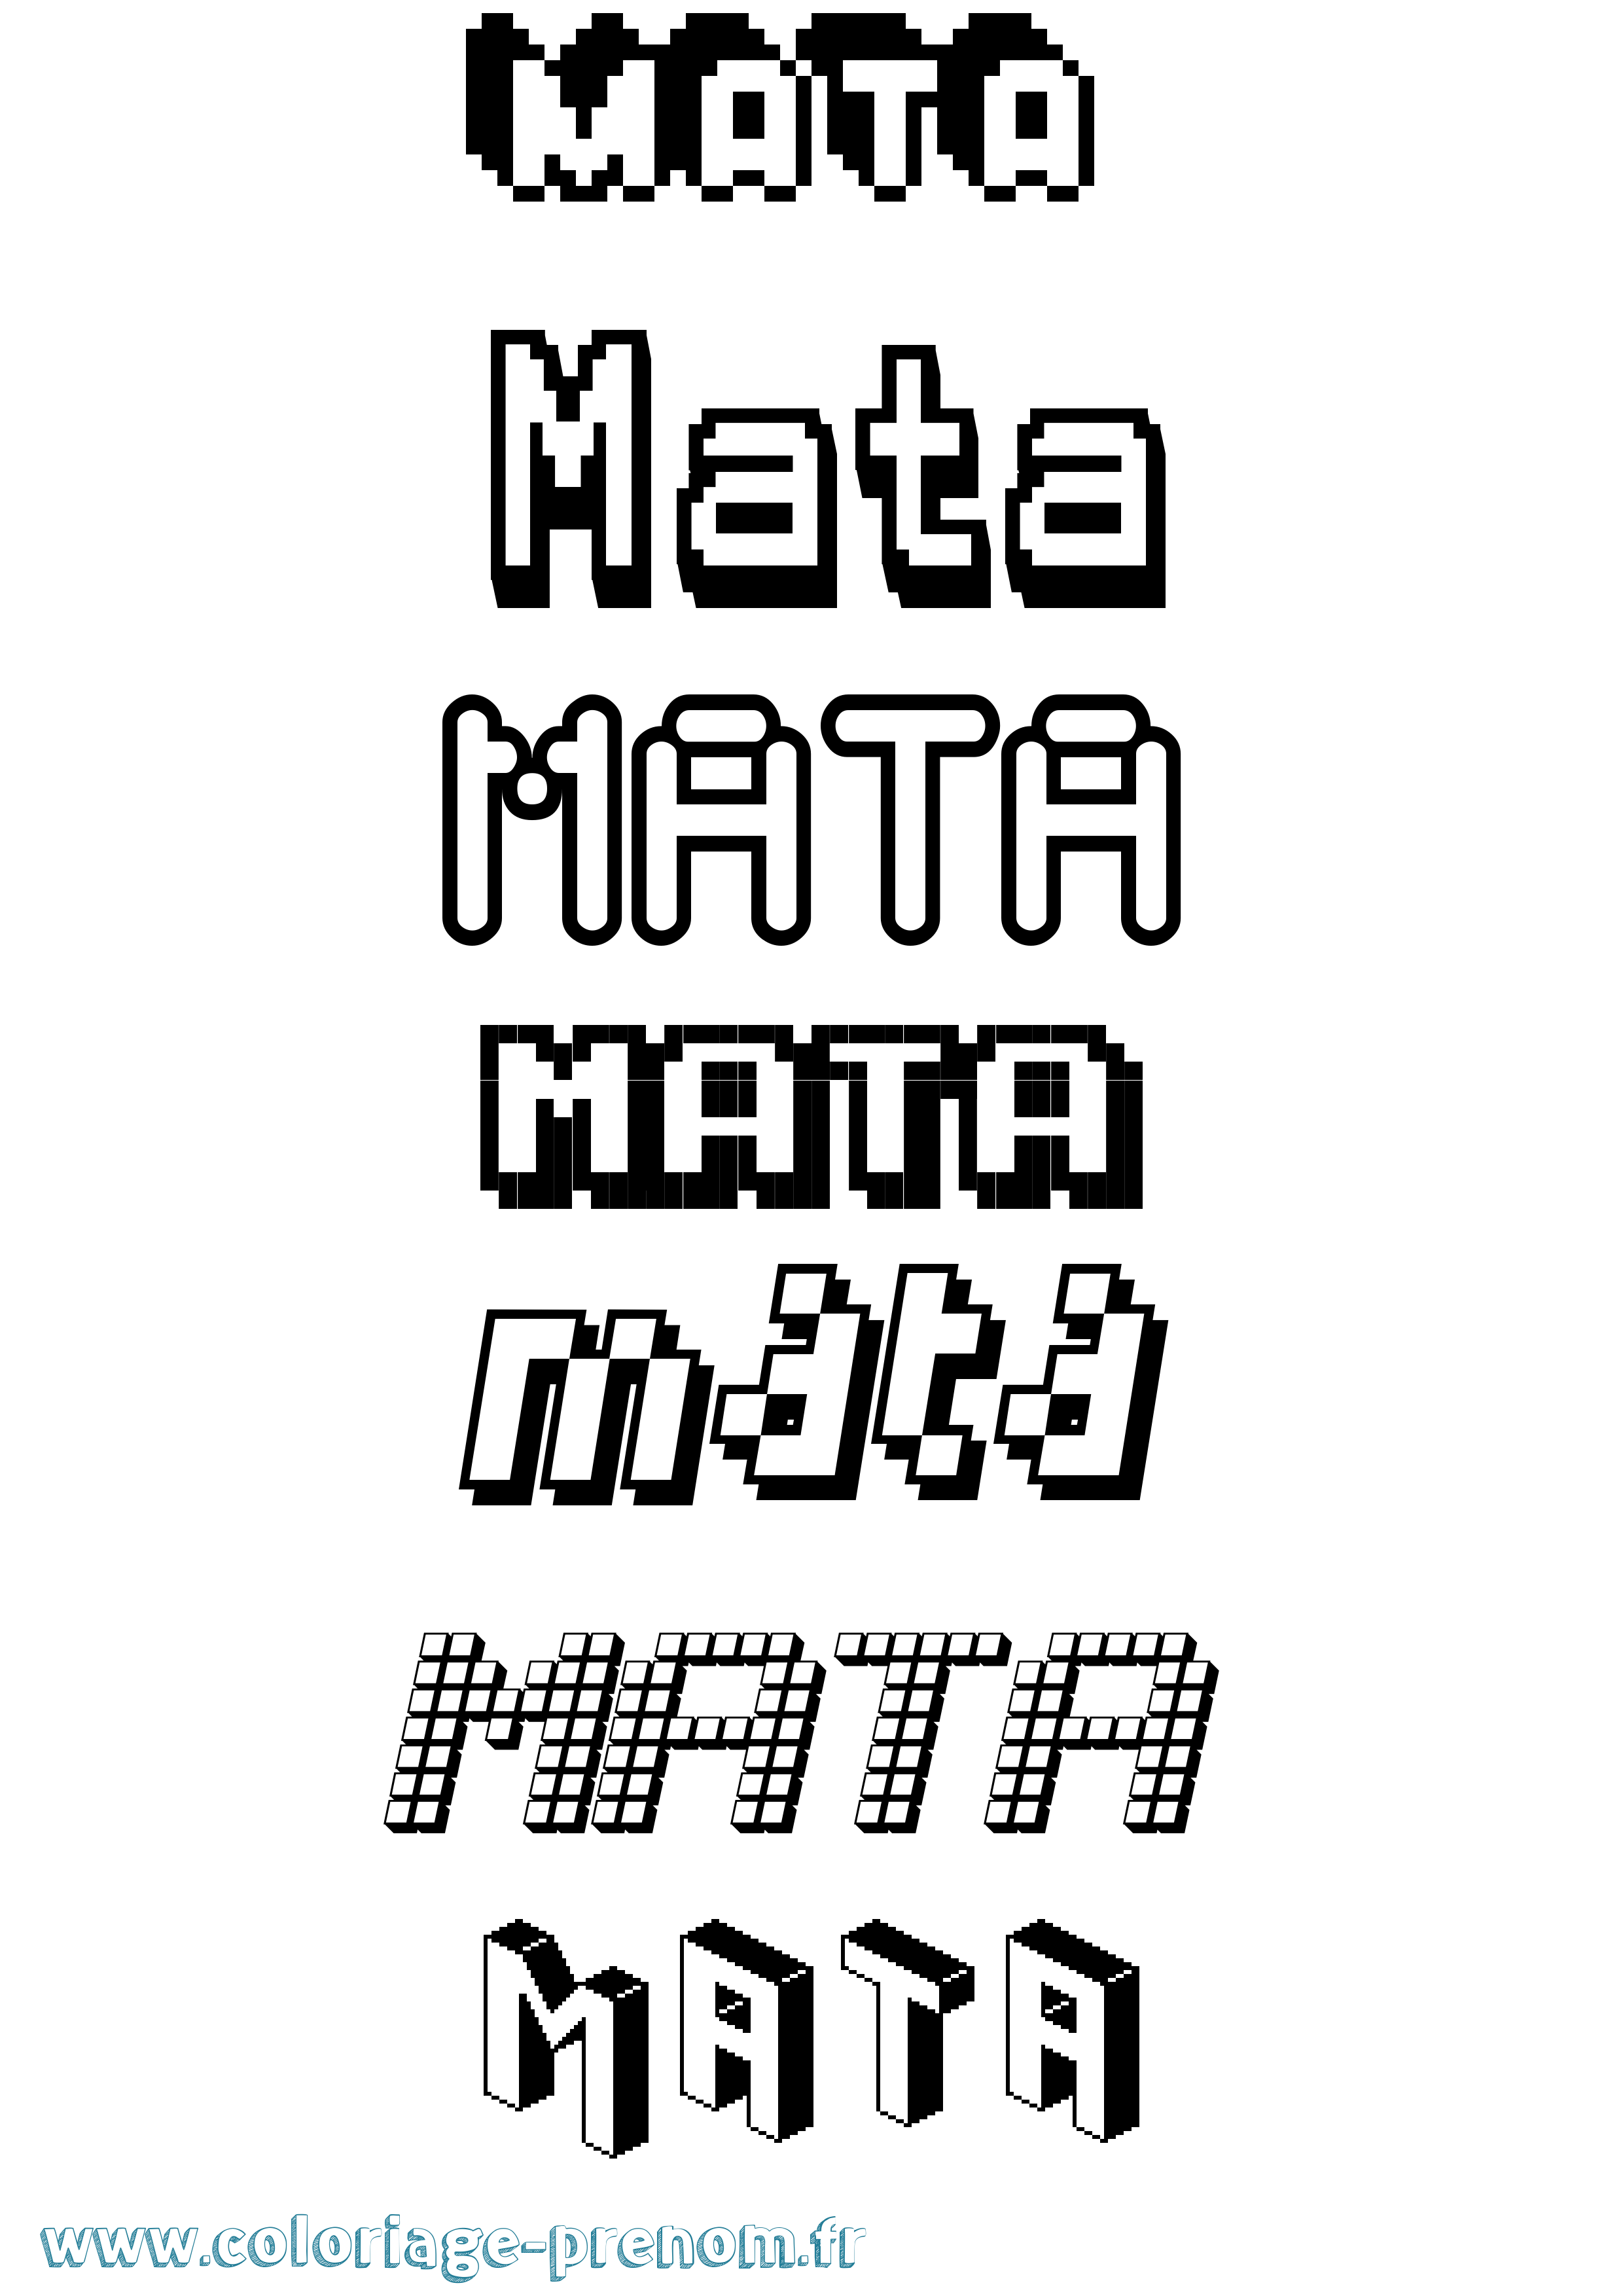 Coloriage prénom Mata Pixel